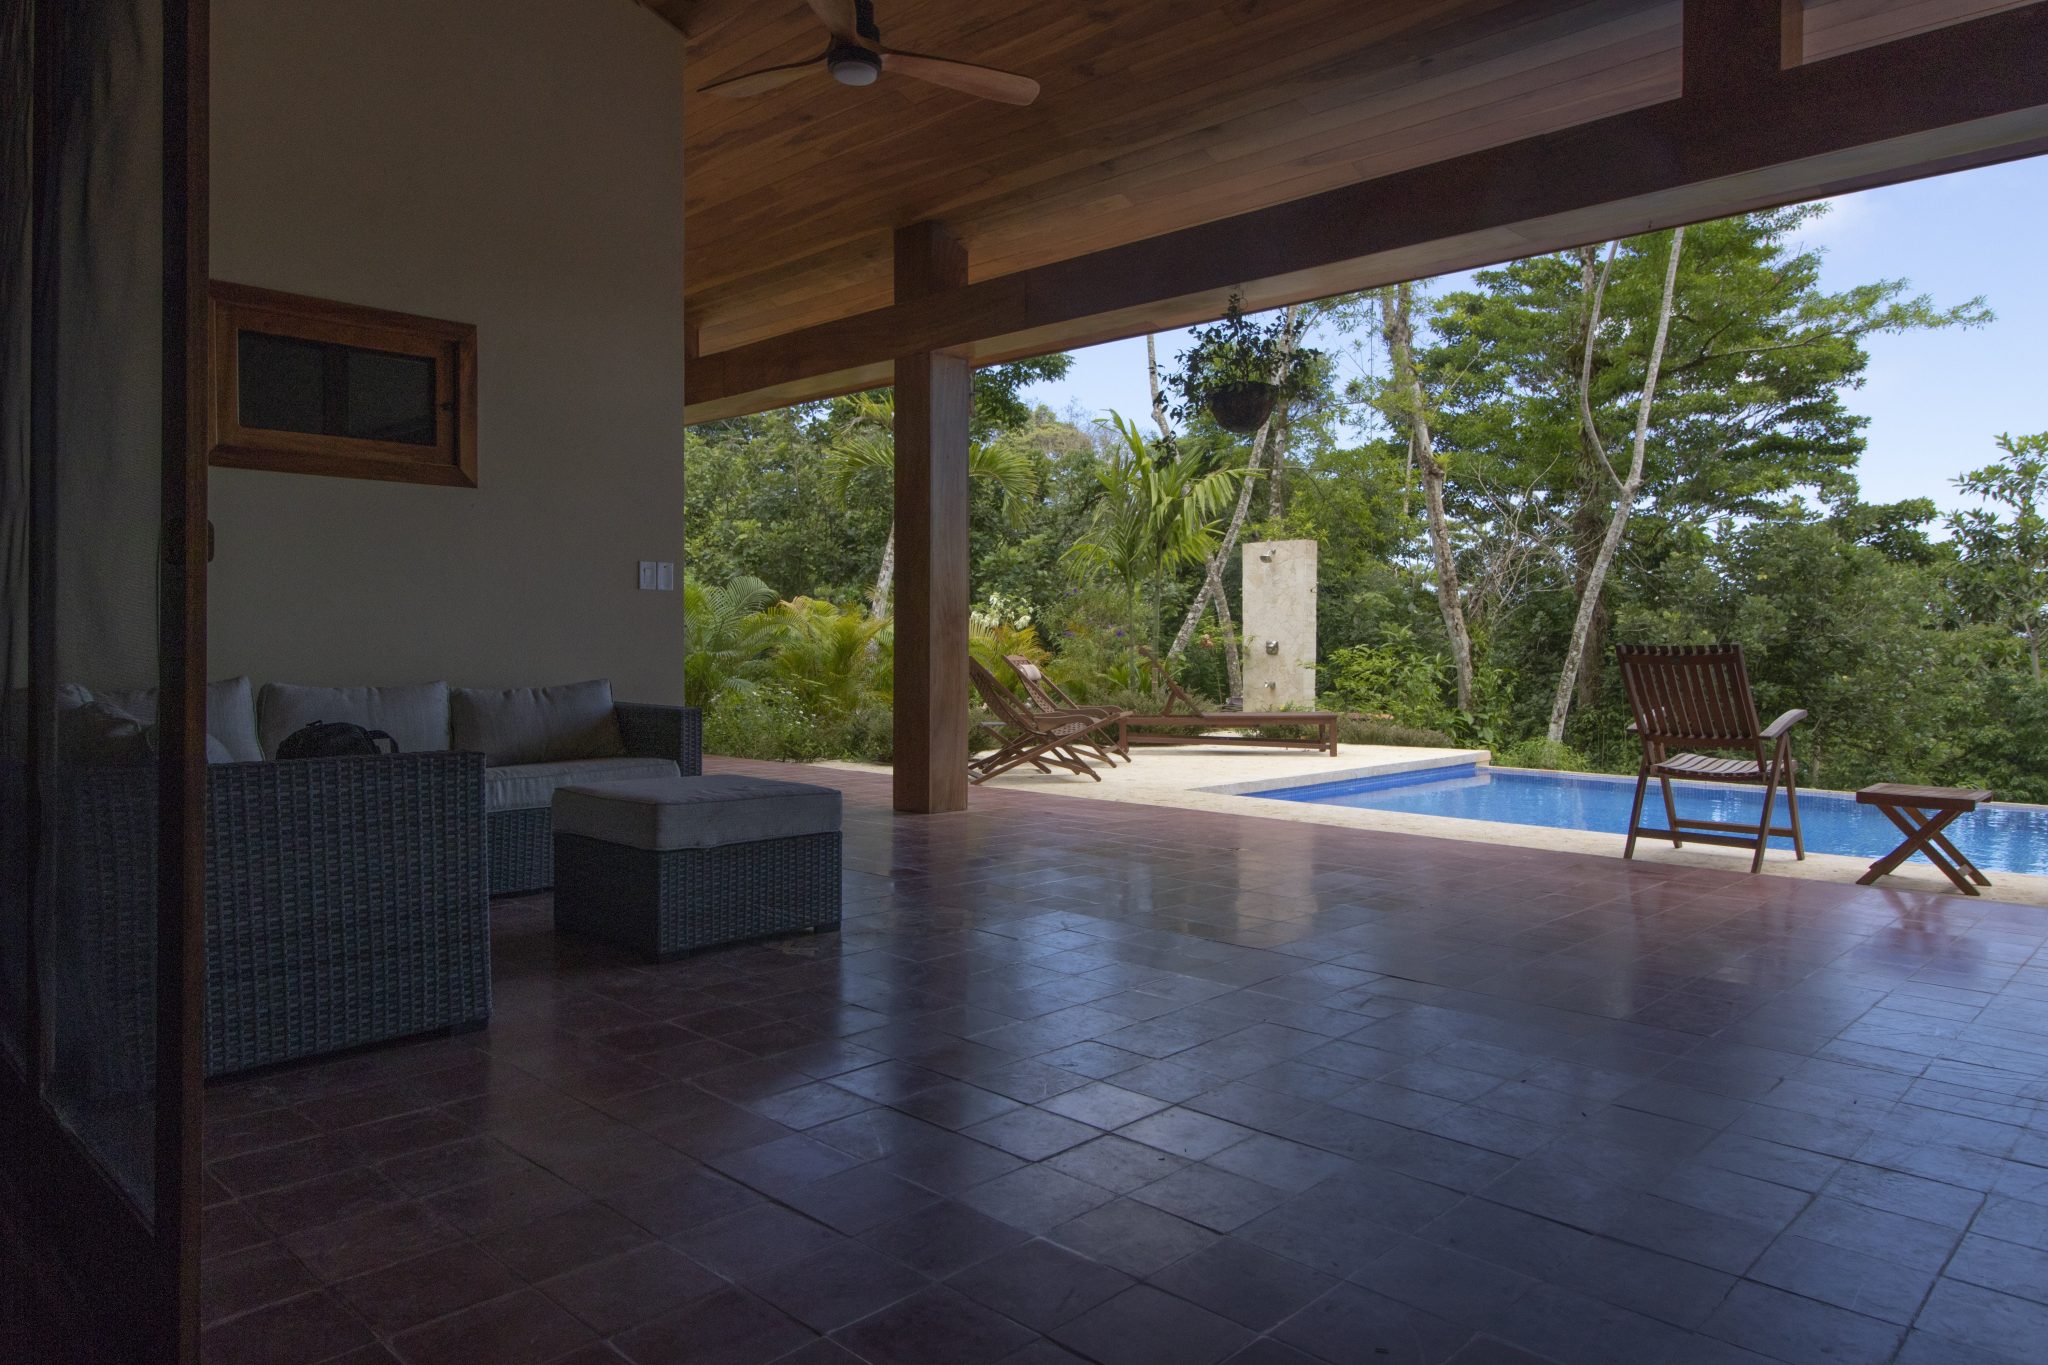 0.83 ACRES - 4 Bedroom Ocean View Home With Pool In Escaleras!!!